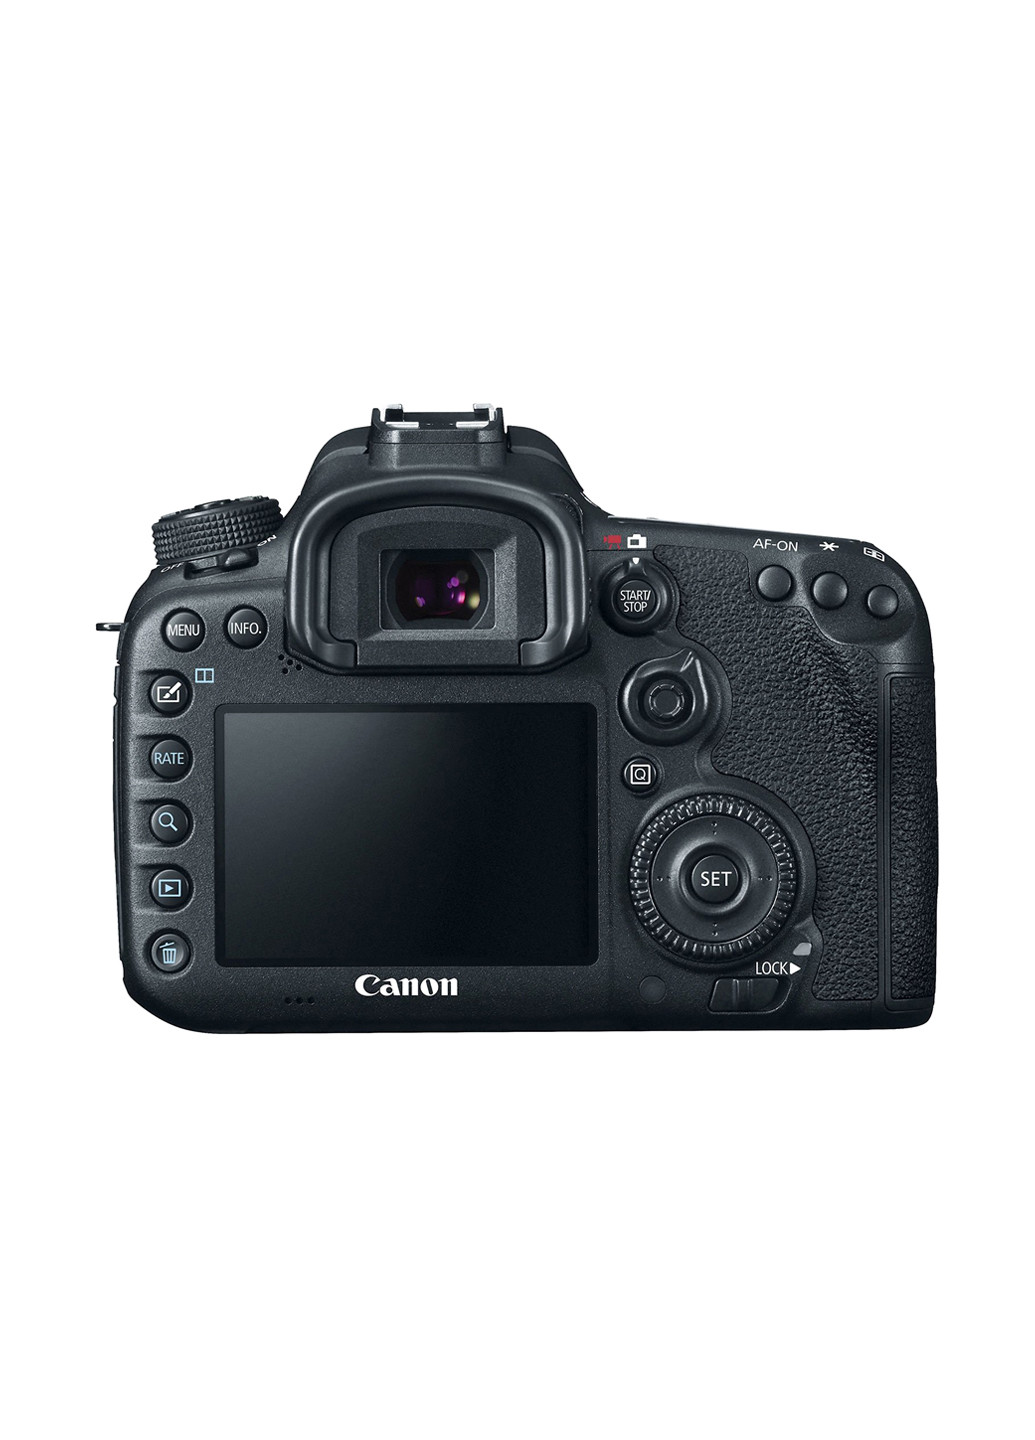 Зеркальная фотокамера Canon eos 7d mark ii body + wifi адаптер w-e1 (130470418)